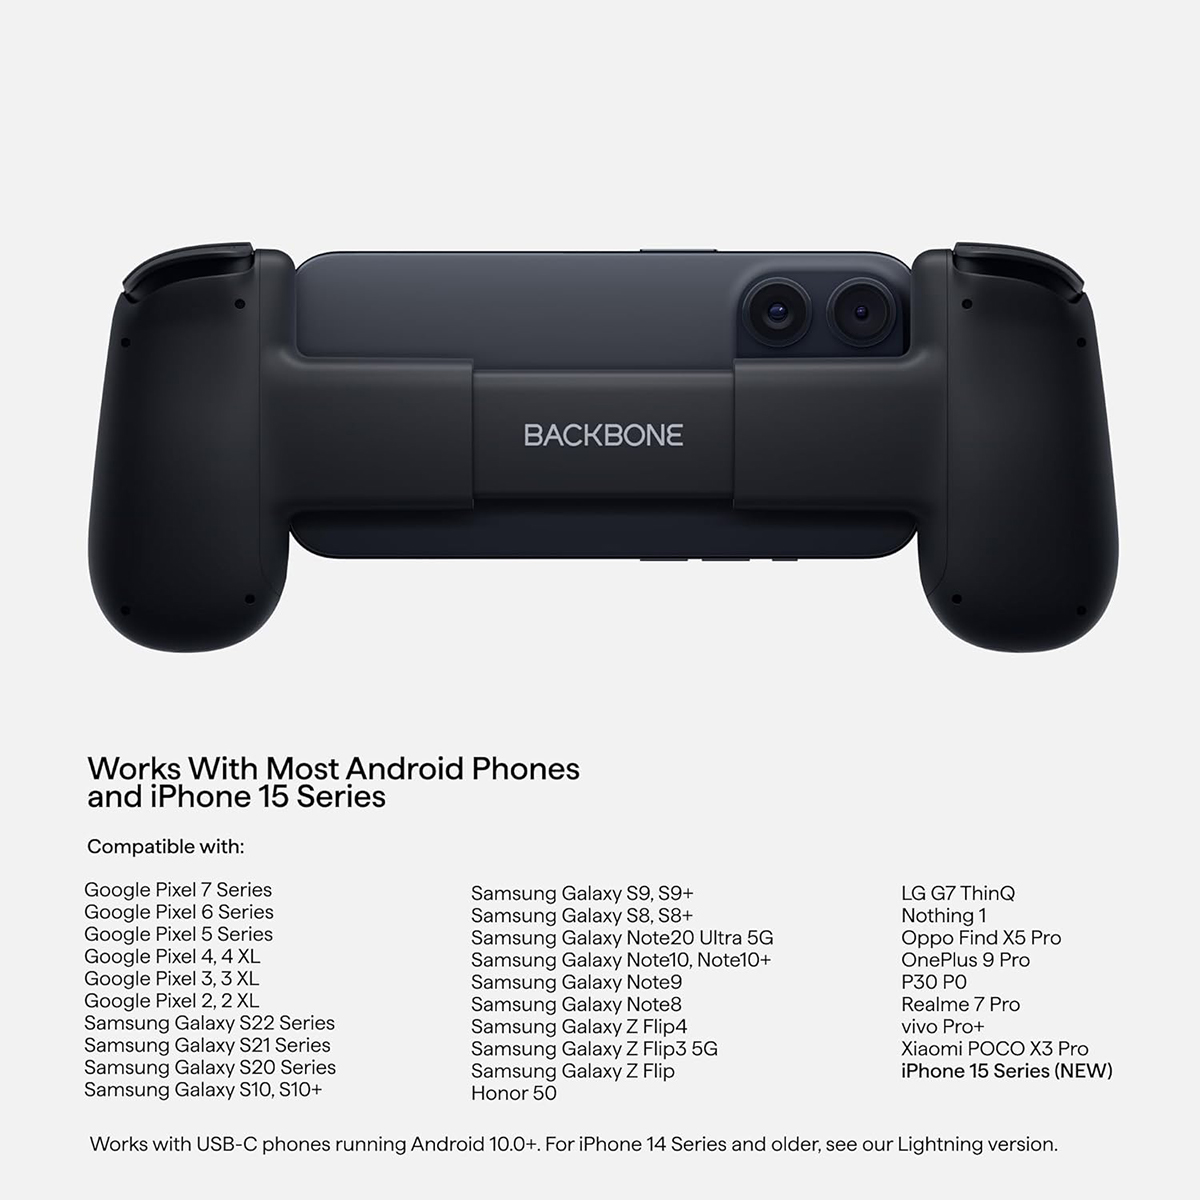 Геймпад BACKBONE One Mobile 2nd Gen для Android / iPhone (USB-C) (черный)